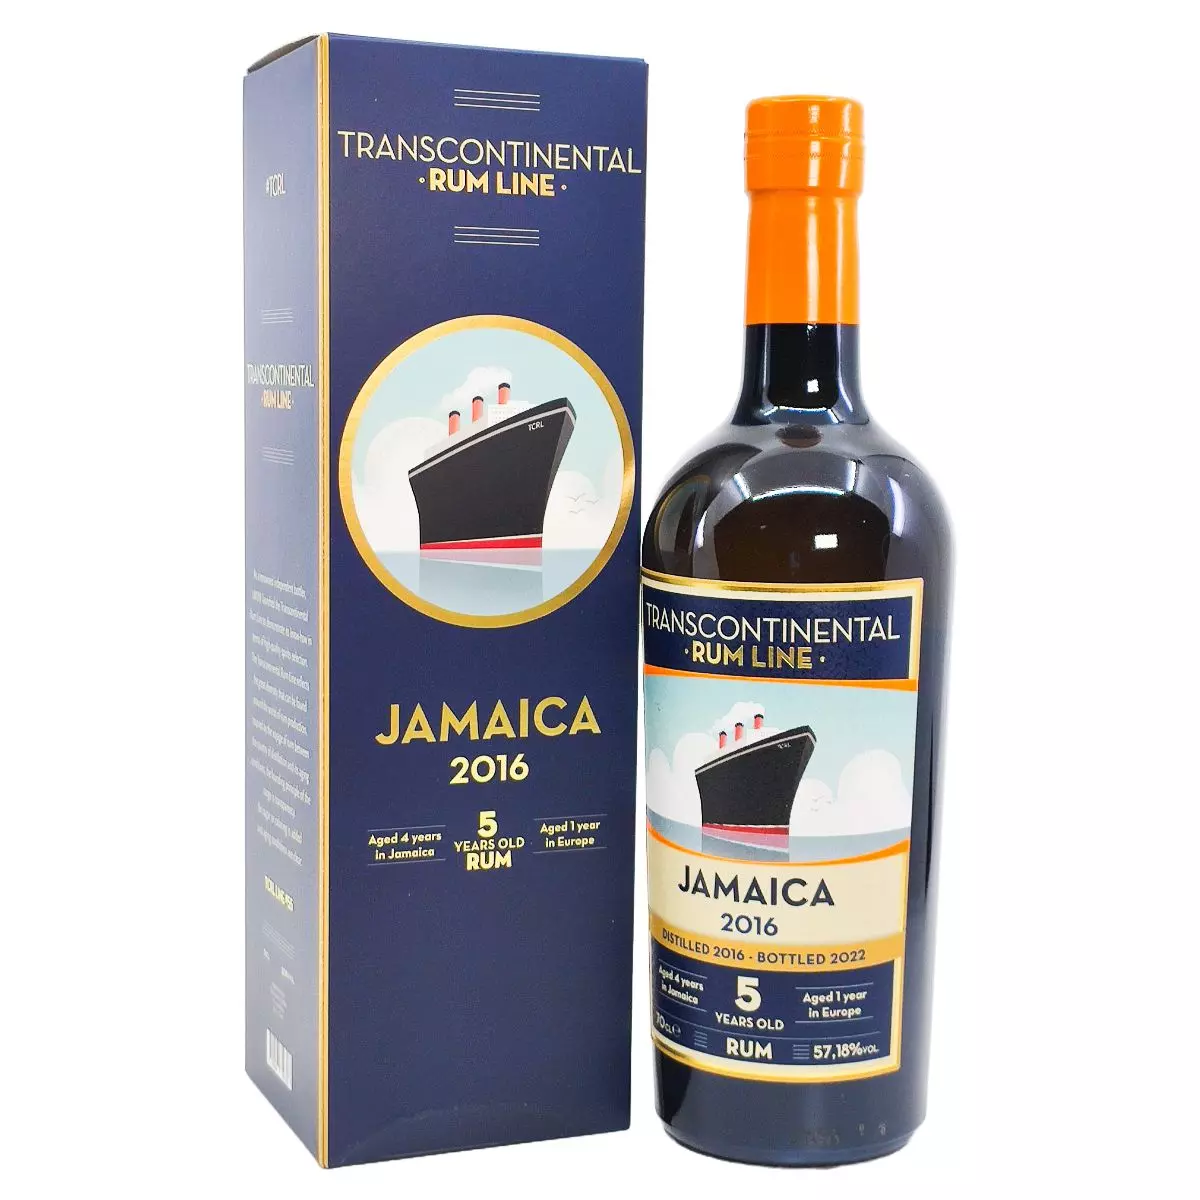 Jamaica 2016 5 éves Transcontinental Line rum (0,7L / 57,18%)